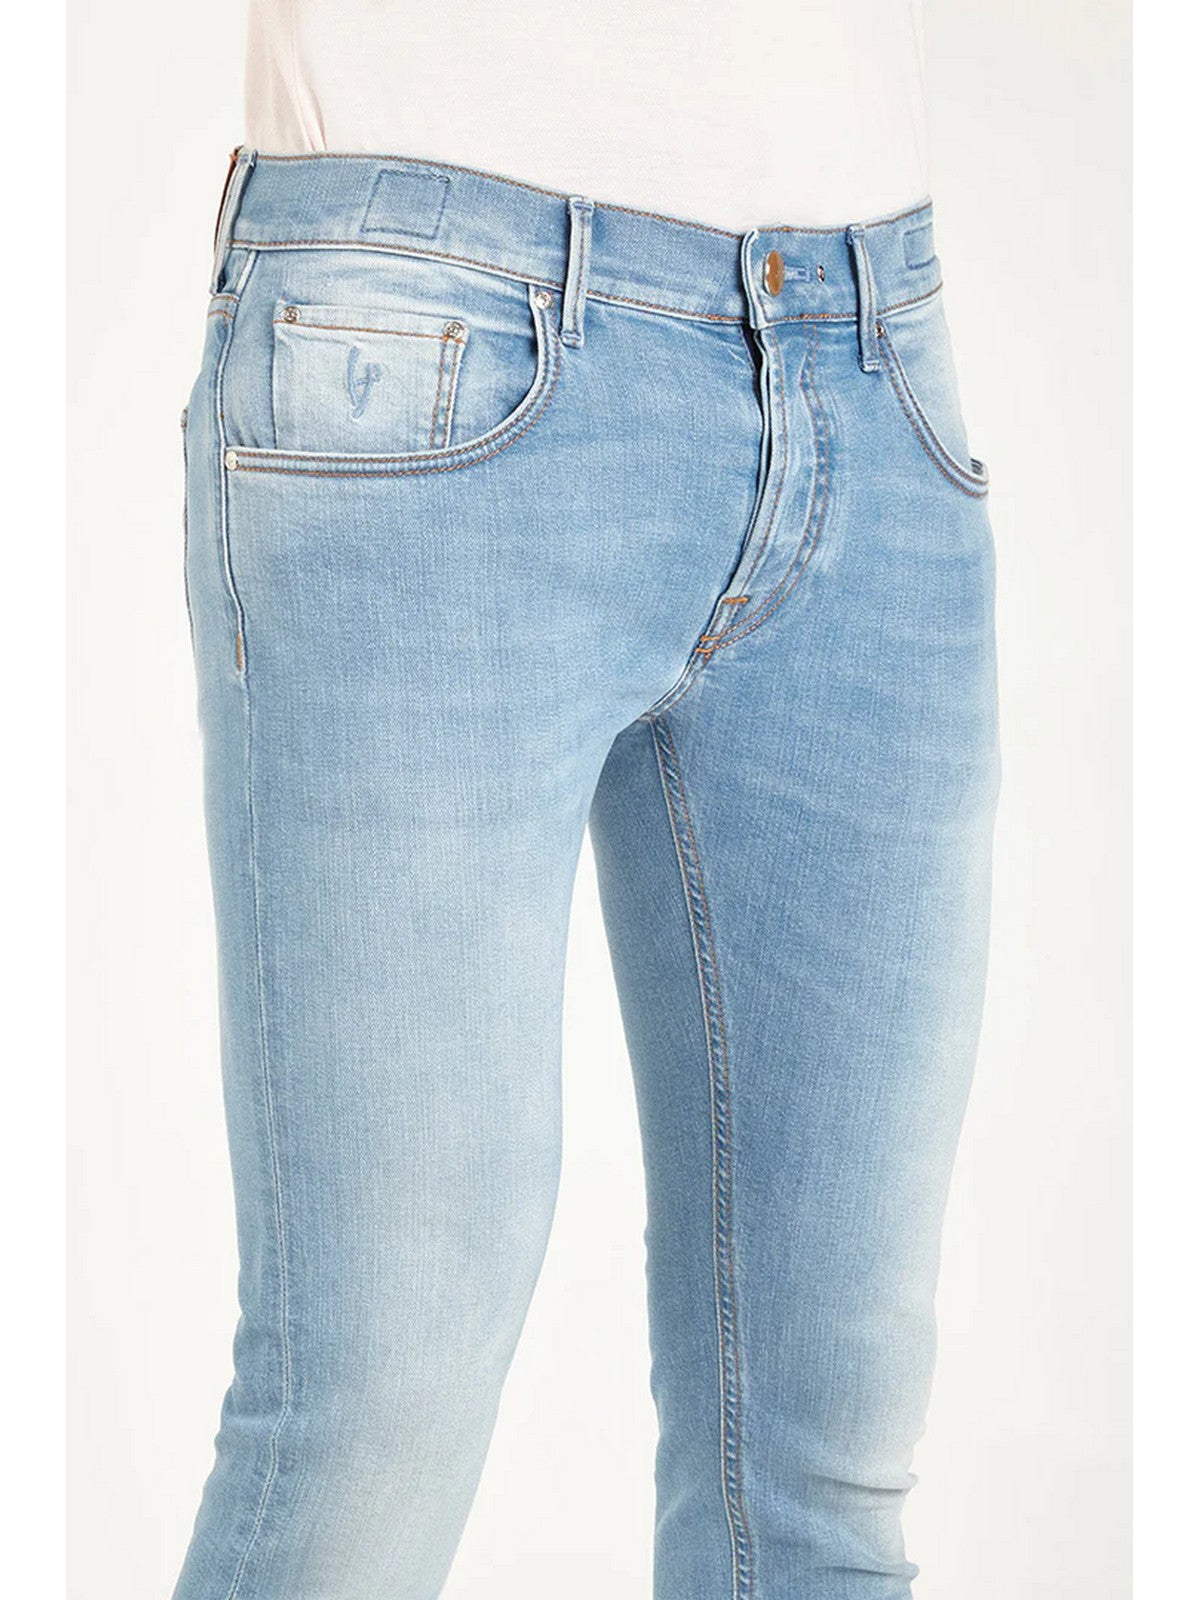 HANDPICKED Jeans Uomo  ORVIETO 03140W5 005 Blu